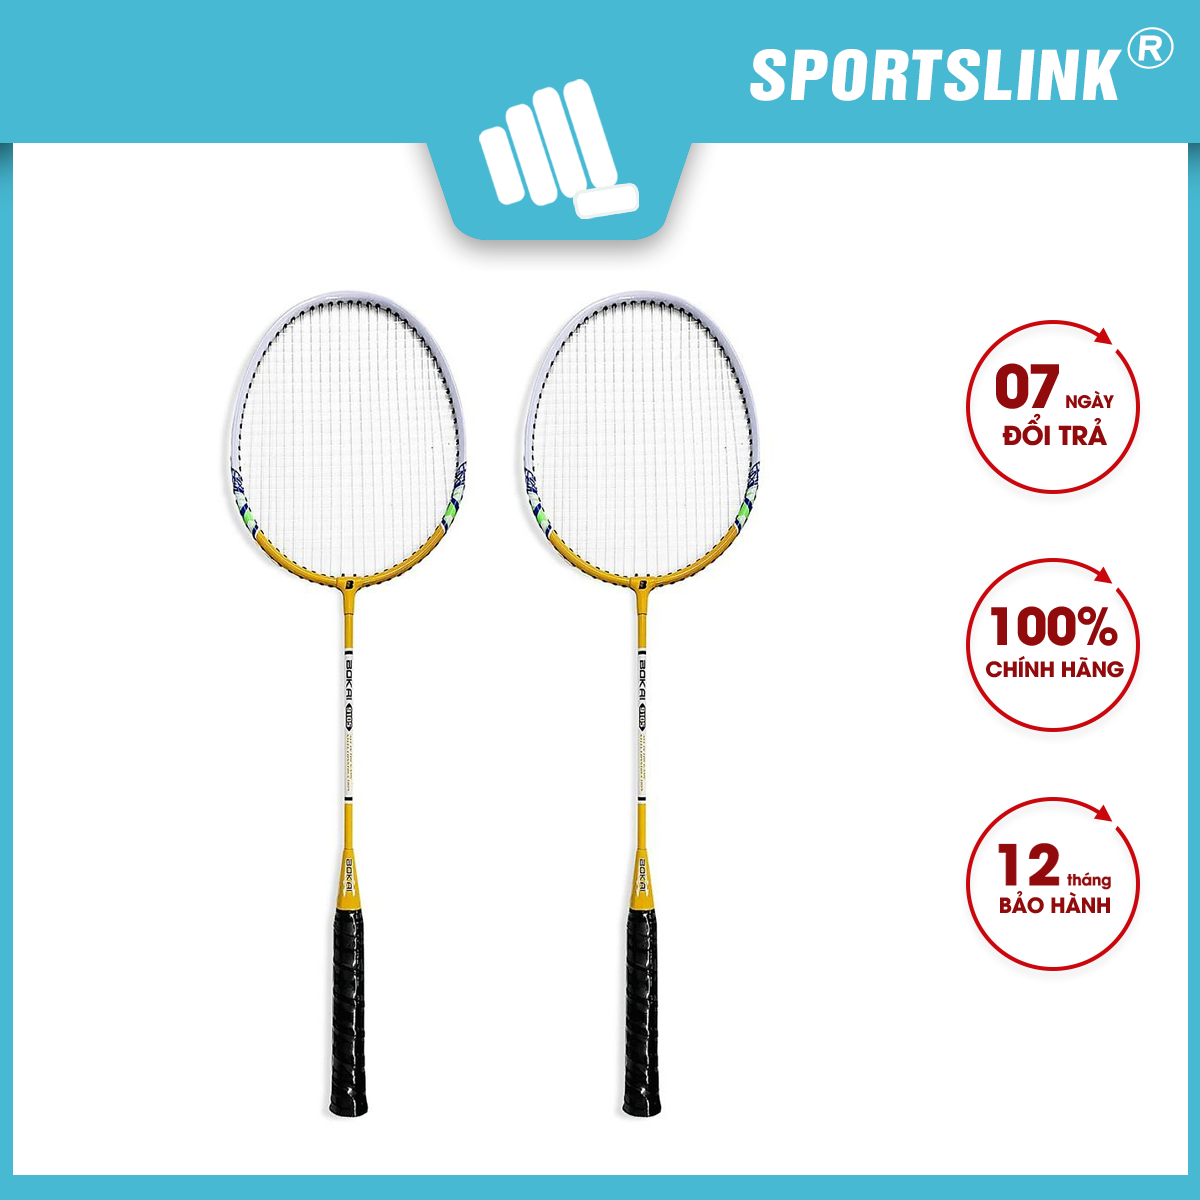 Cặp vợt cầu lông Sportslink Bokai BK-9105